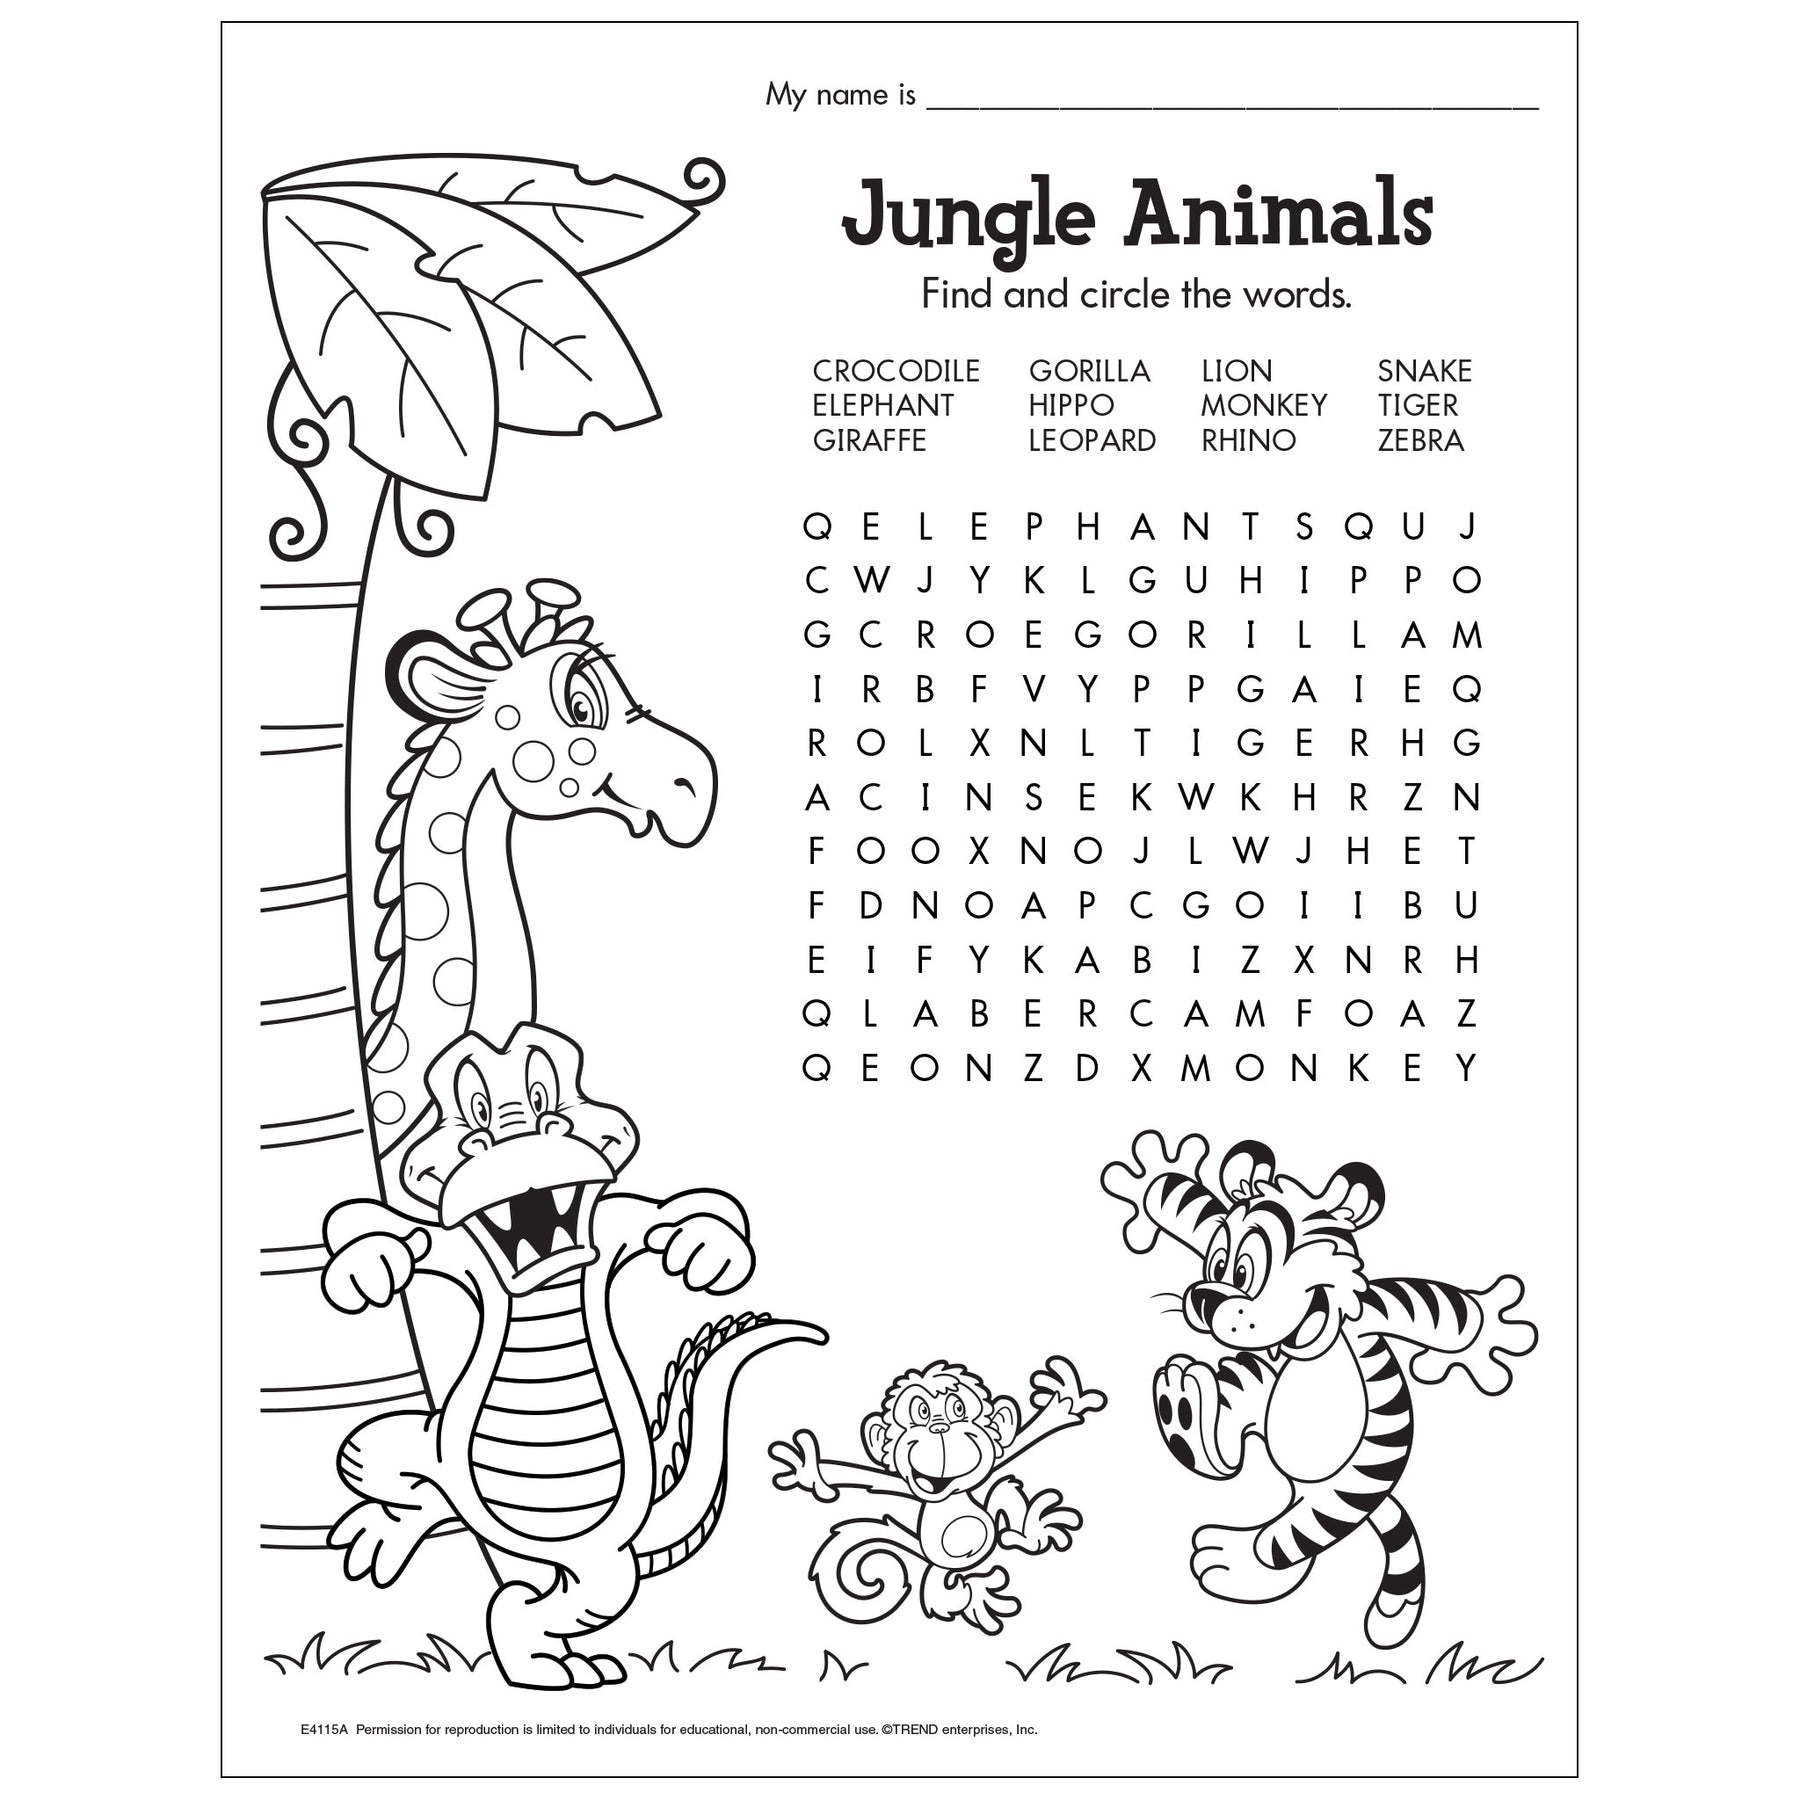 Free printable jungle animals word find â trend enterprises inc